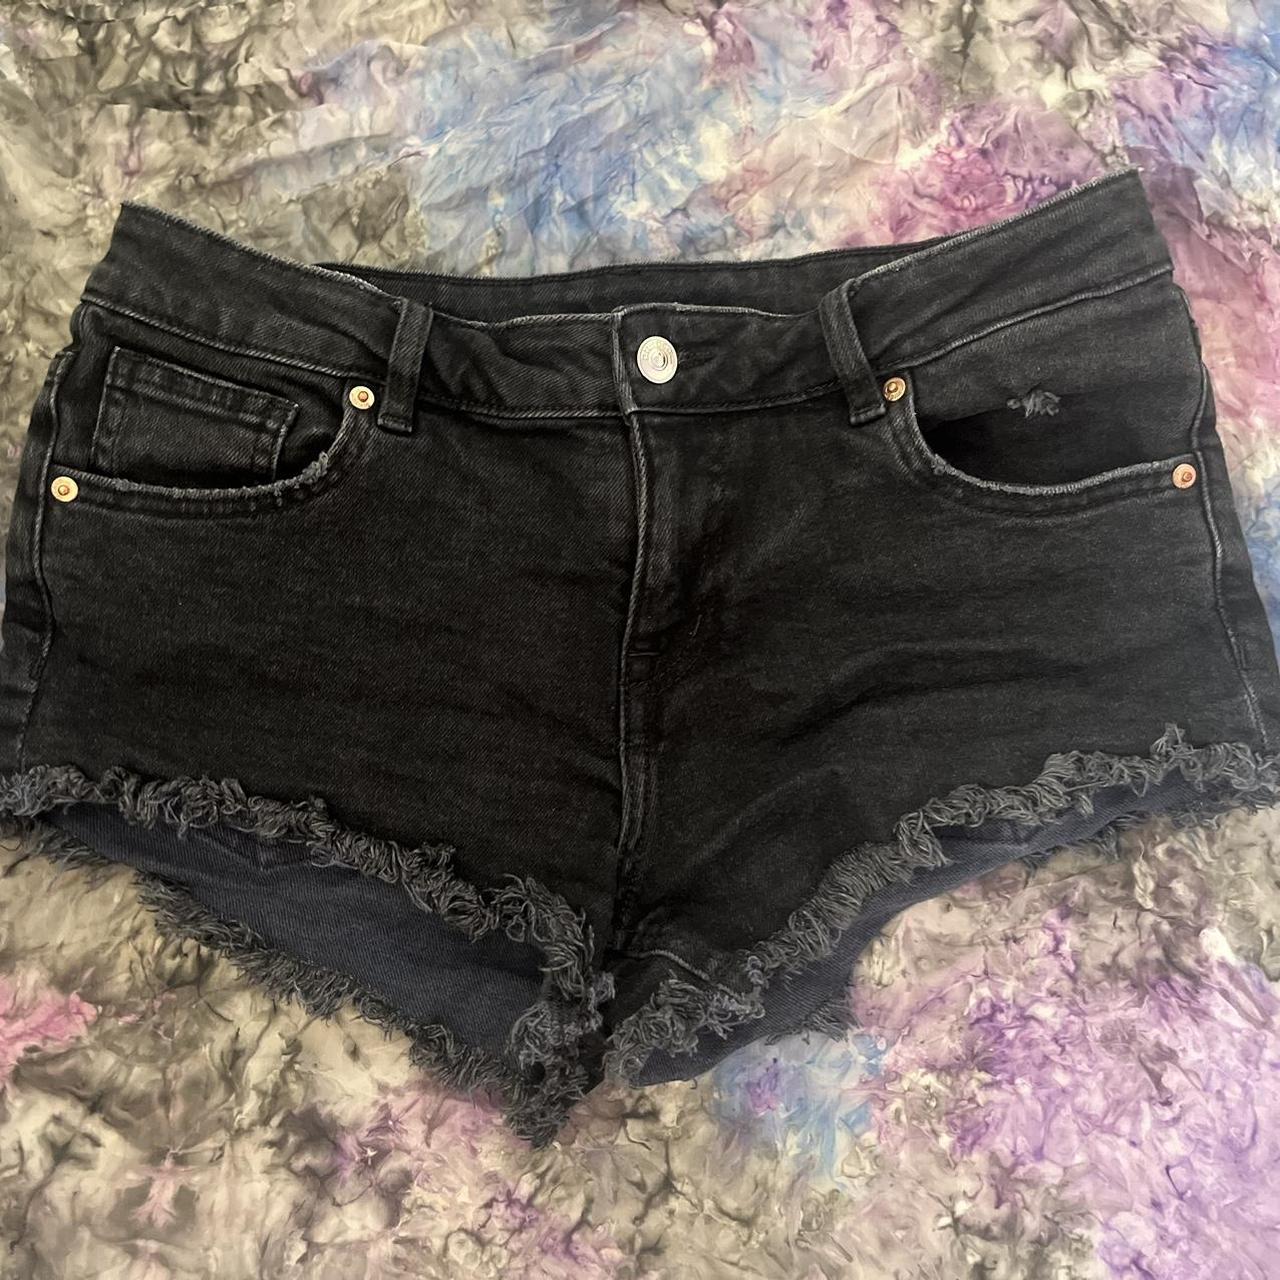 Low waist denim booty shorts